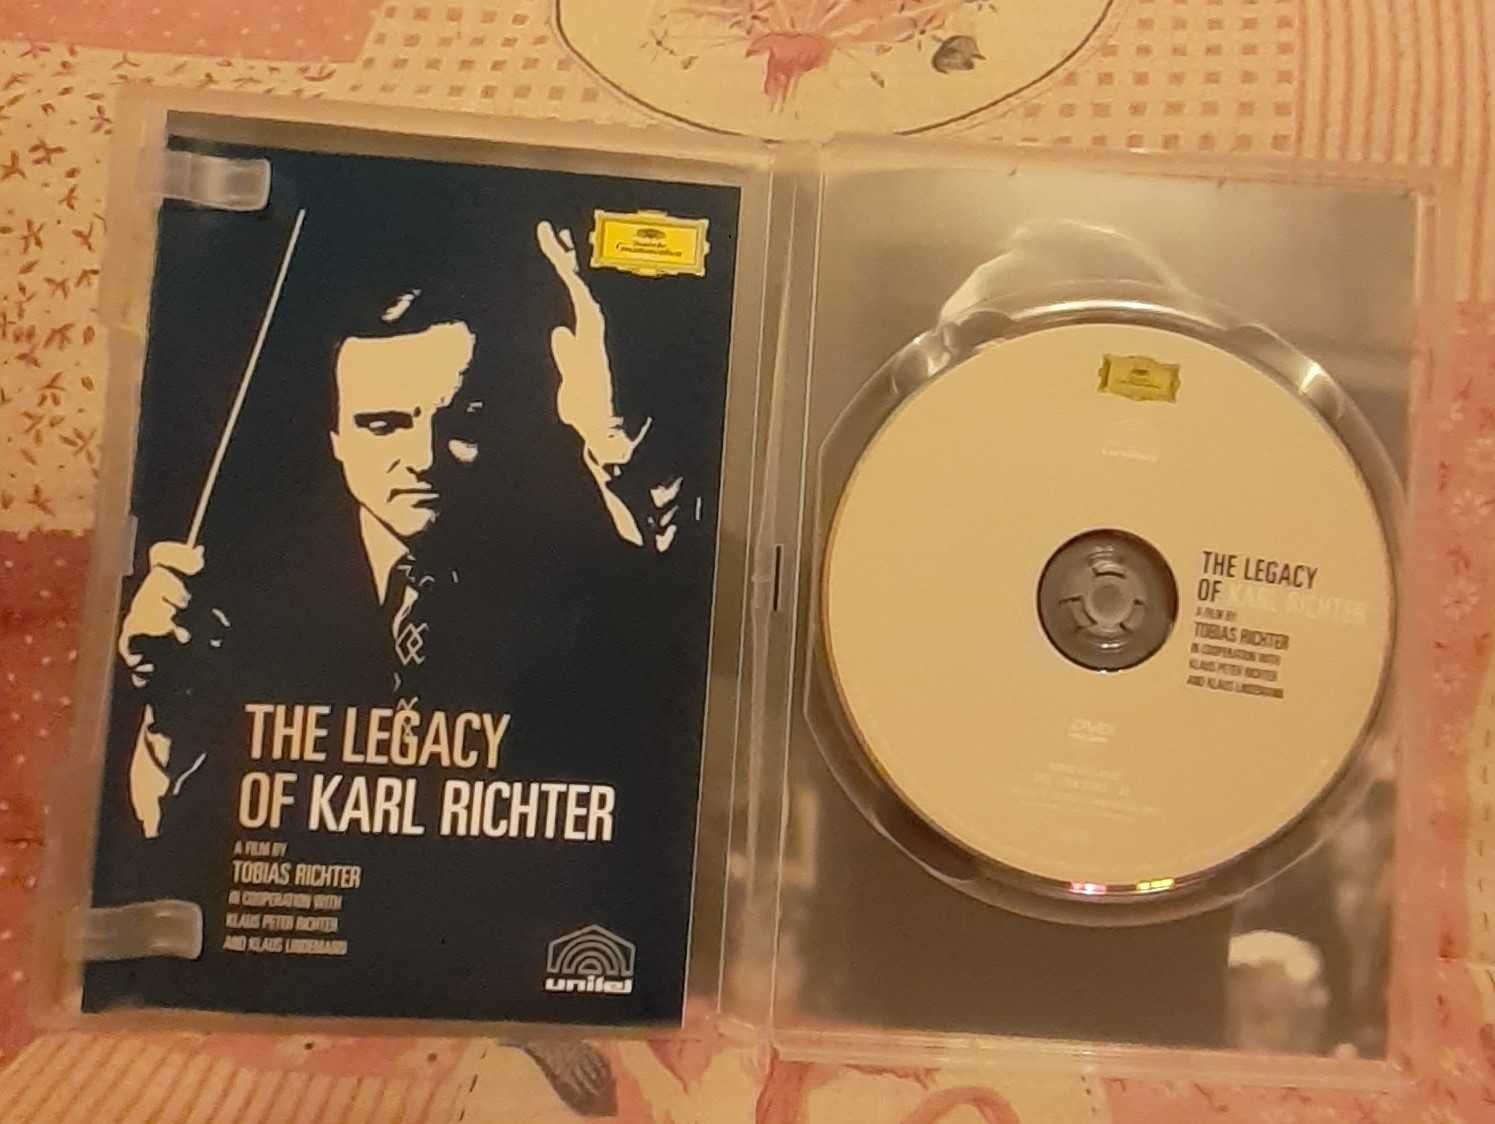 DVD - Il Trovatore (The Trouba) Selado e The Legacy Of Karl Richter